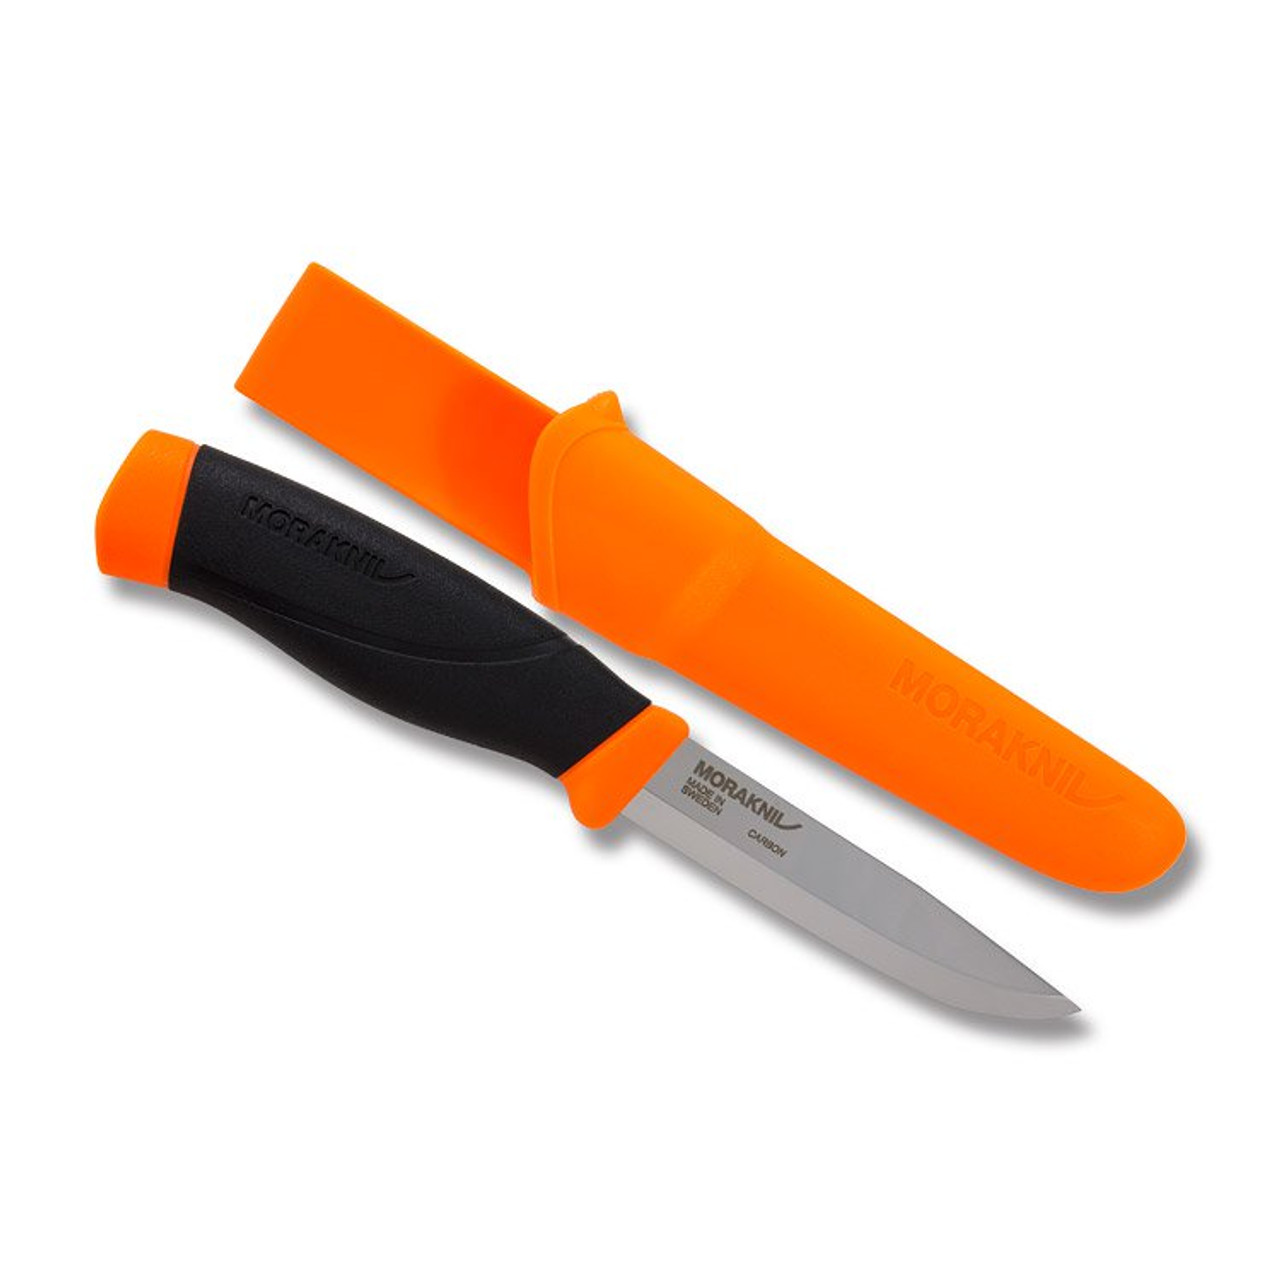 MoraKniv Kansbol Orange Fixed Blade Knife - Smoky Mountain Knife Works